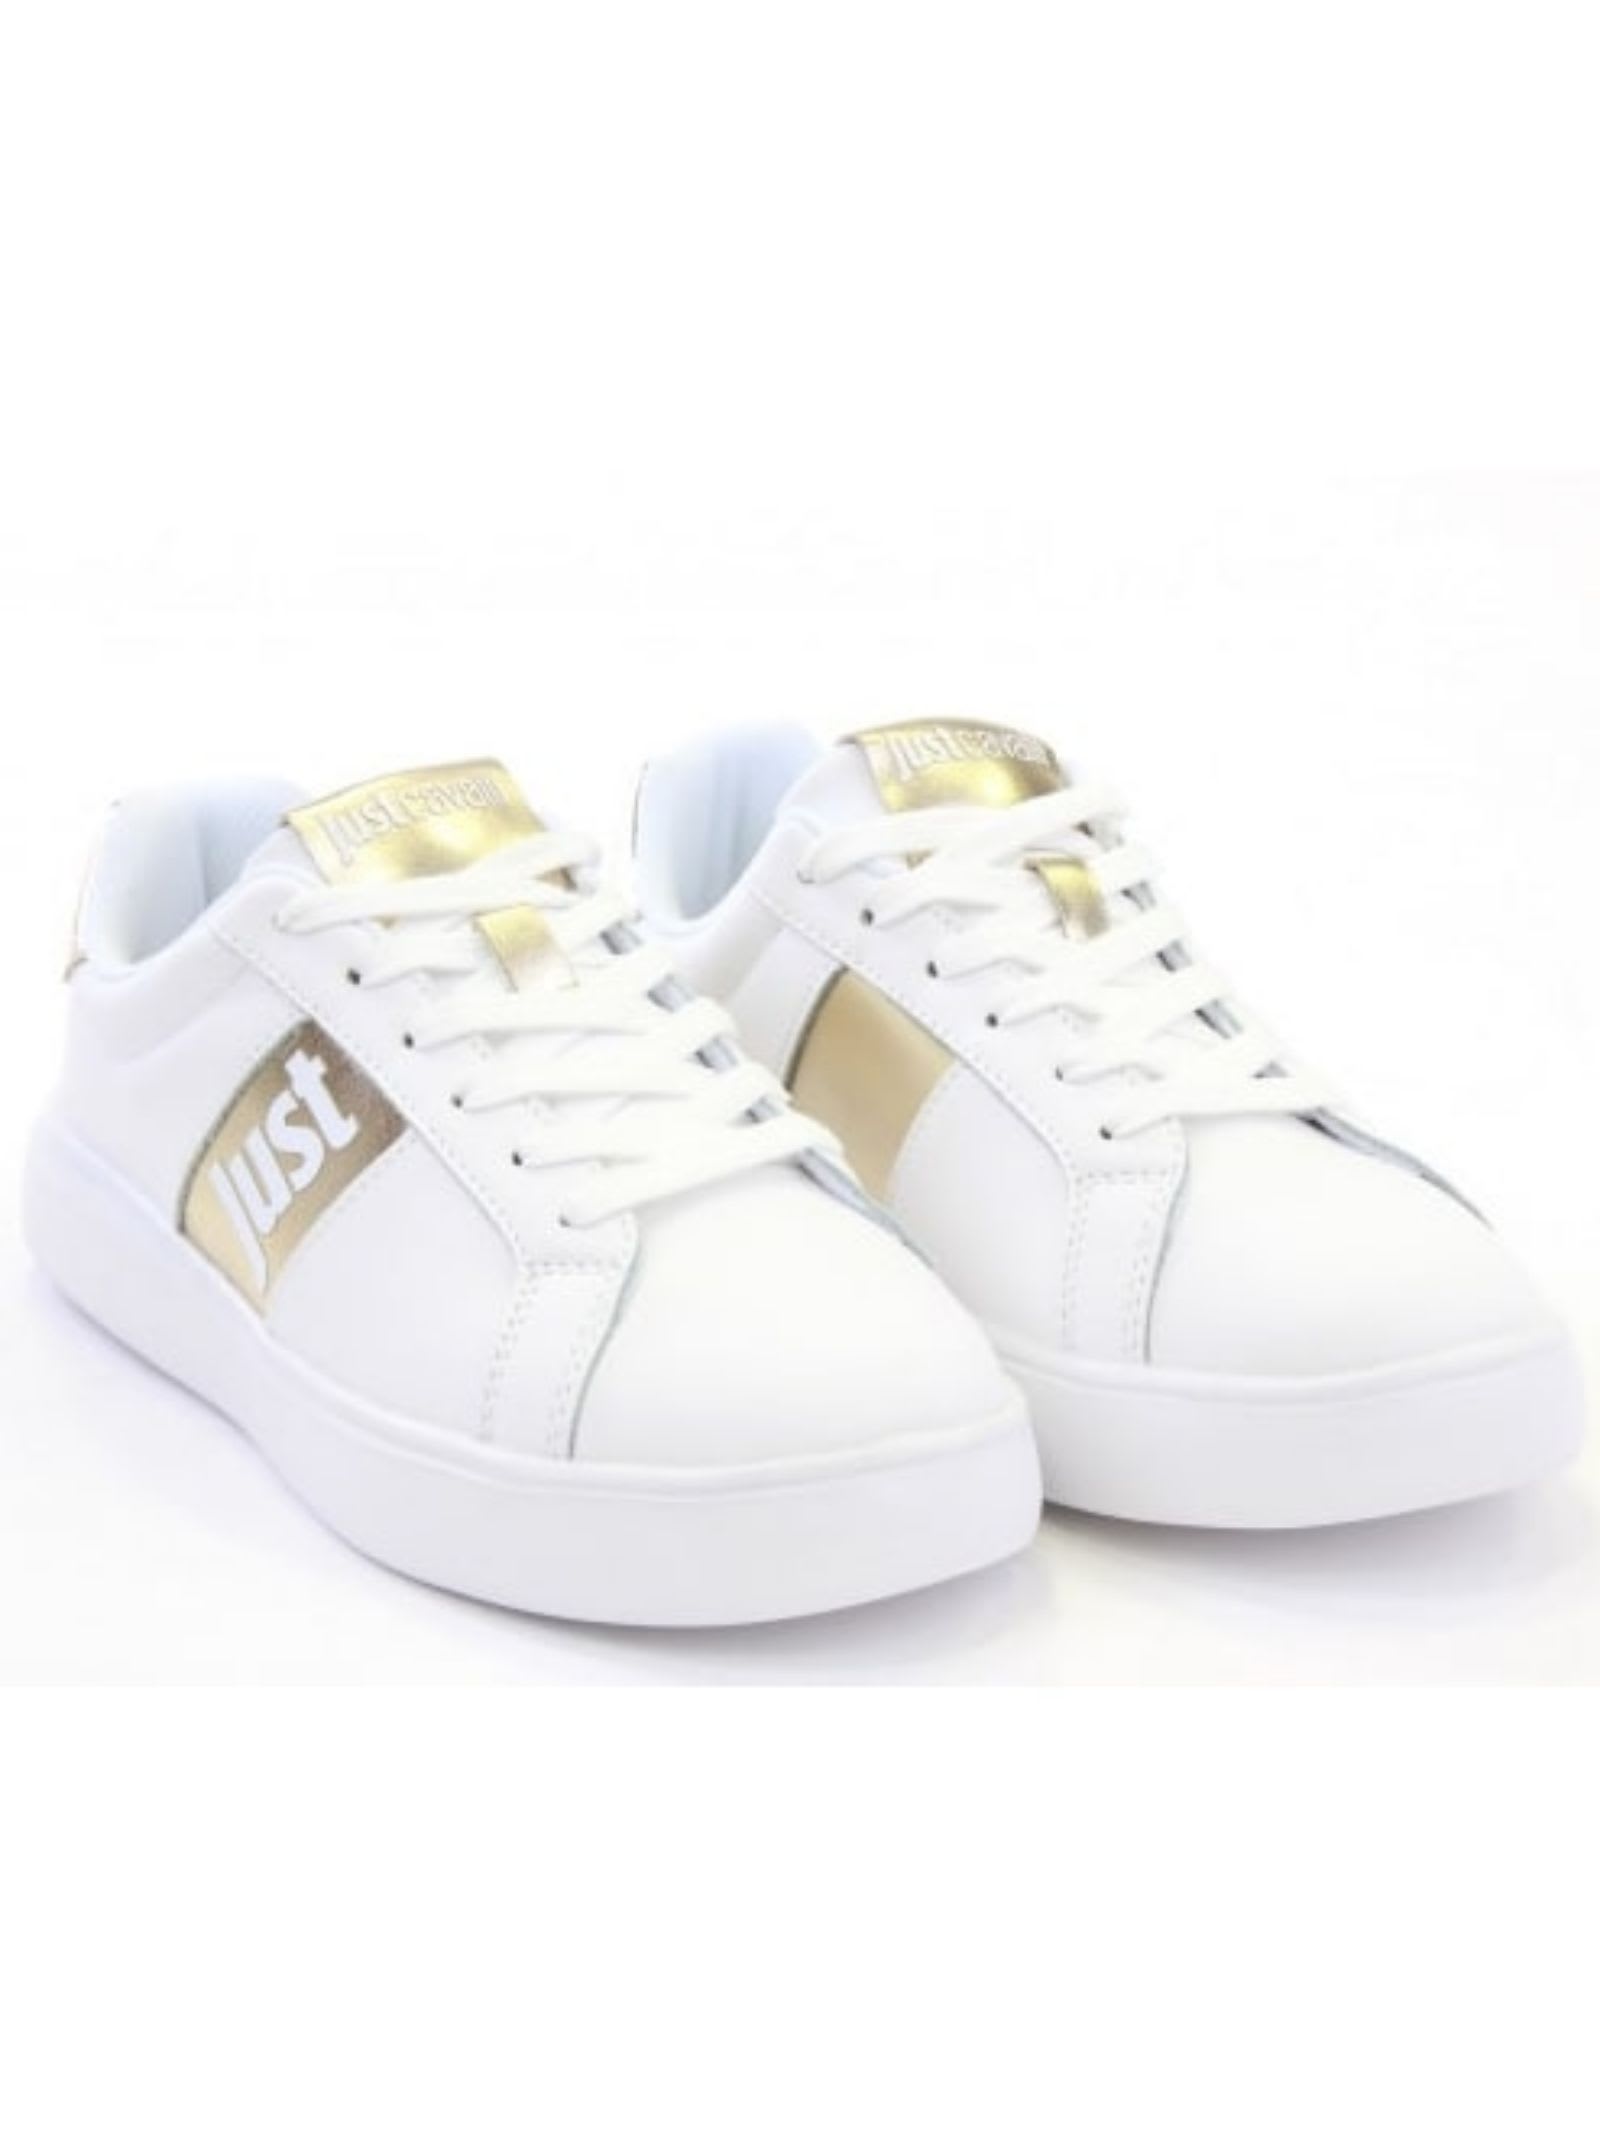 Roberto Cavalli Just Cavalli Shoes In White/gold